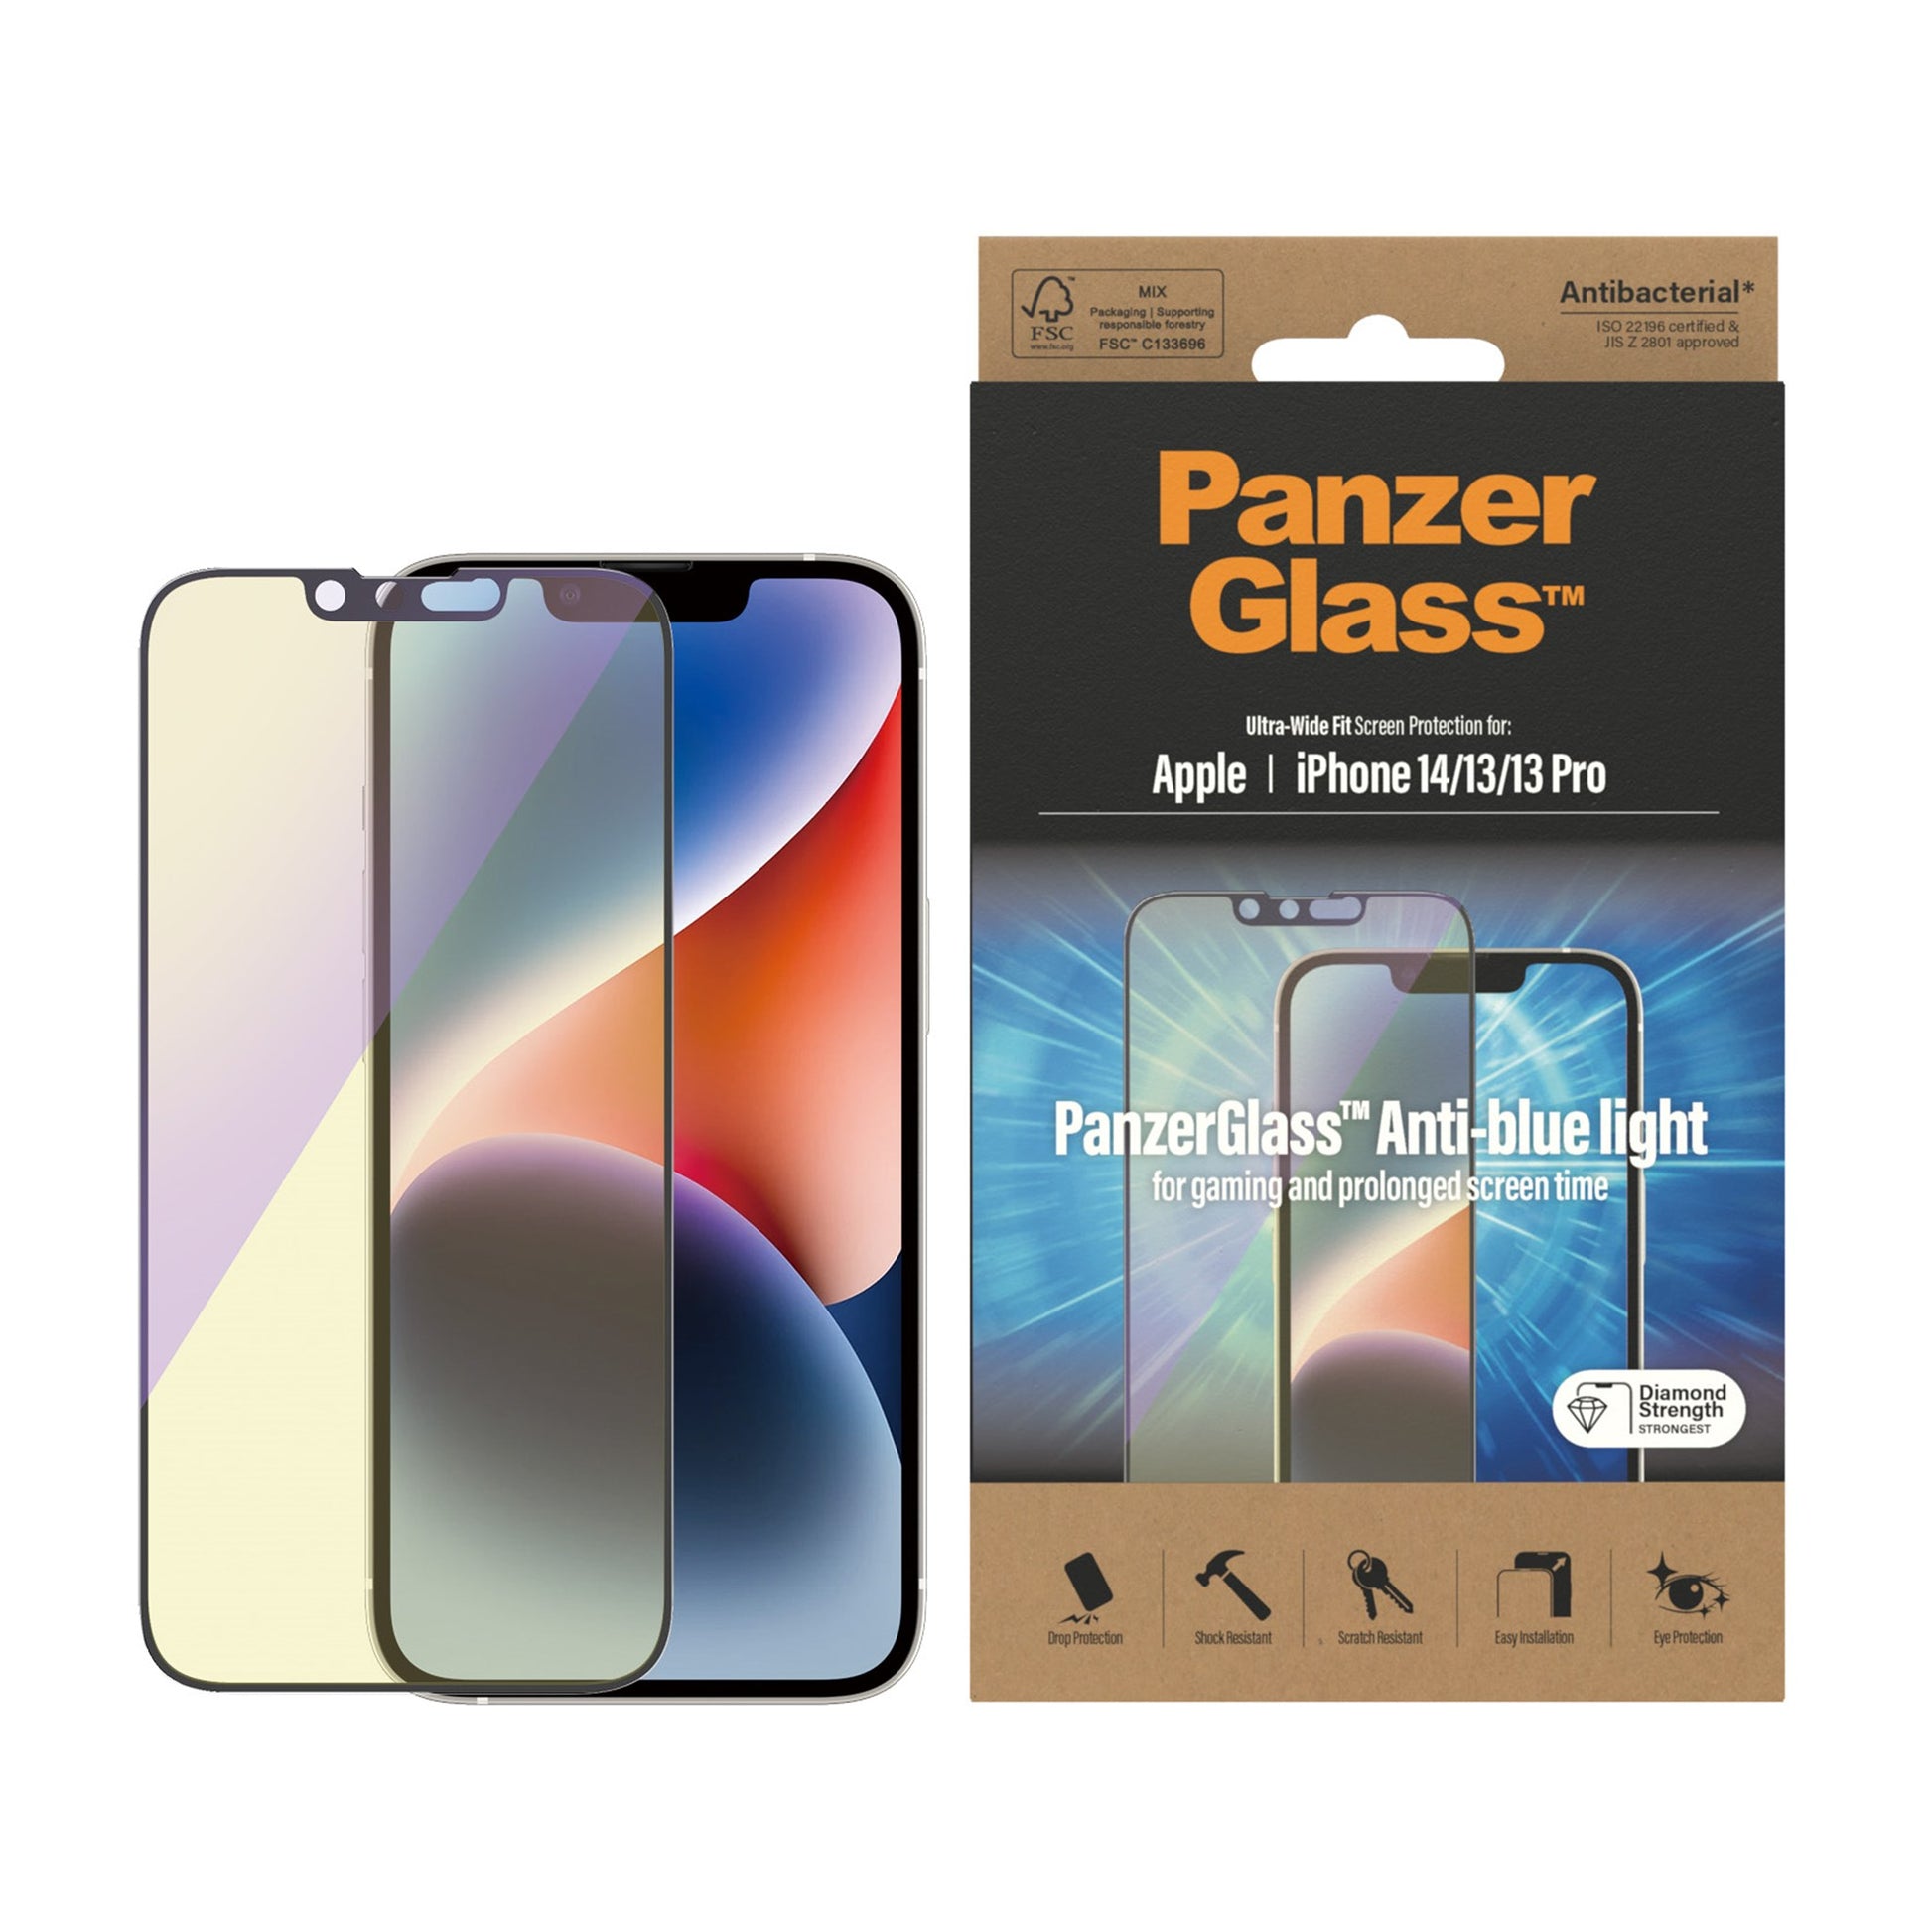 PanzerGlass™ Anti-blue light Screen Protector Apple iPhone 14 | 13 | 13 Pro | Ultra-Wide Fit 2